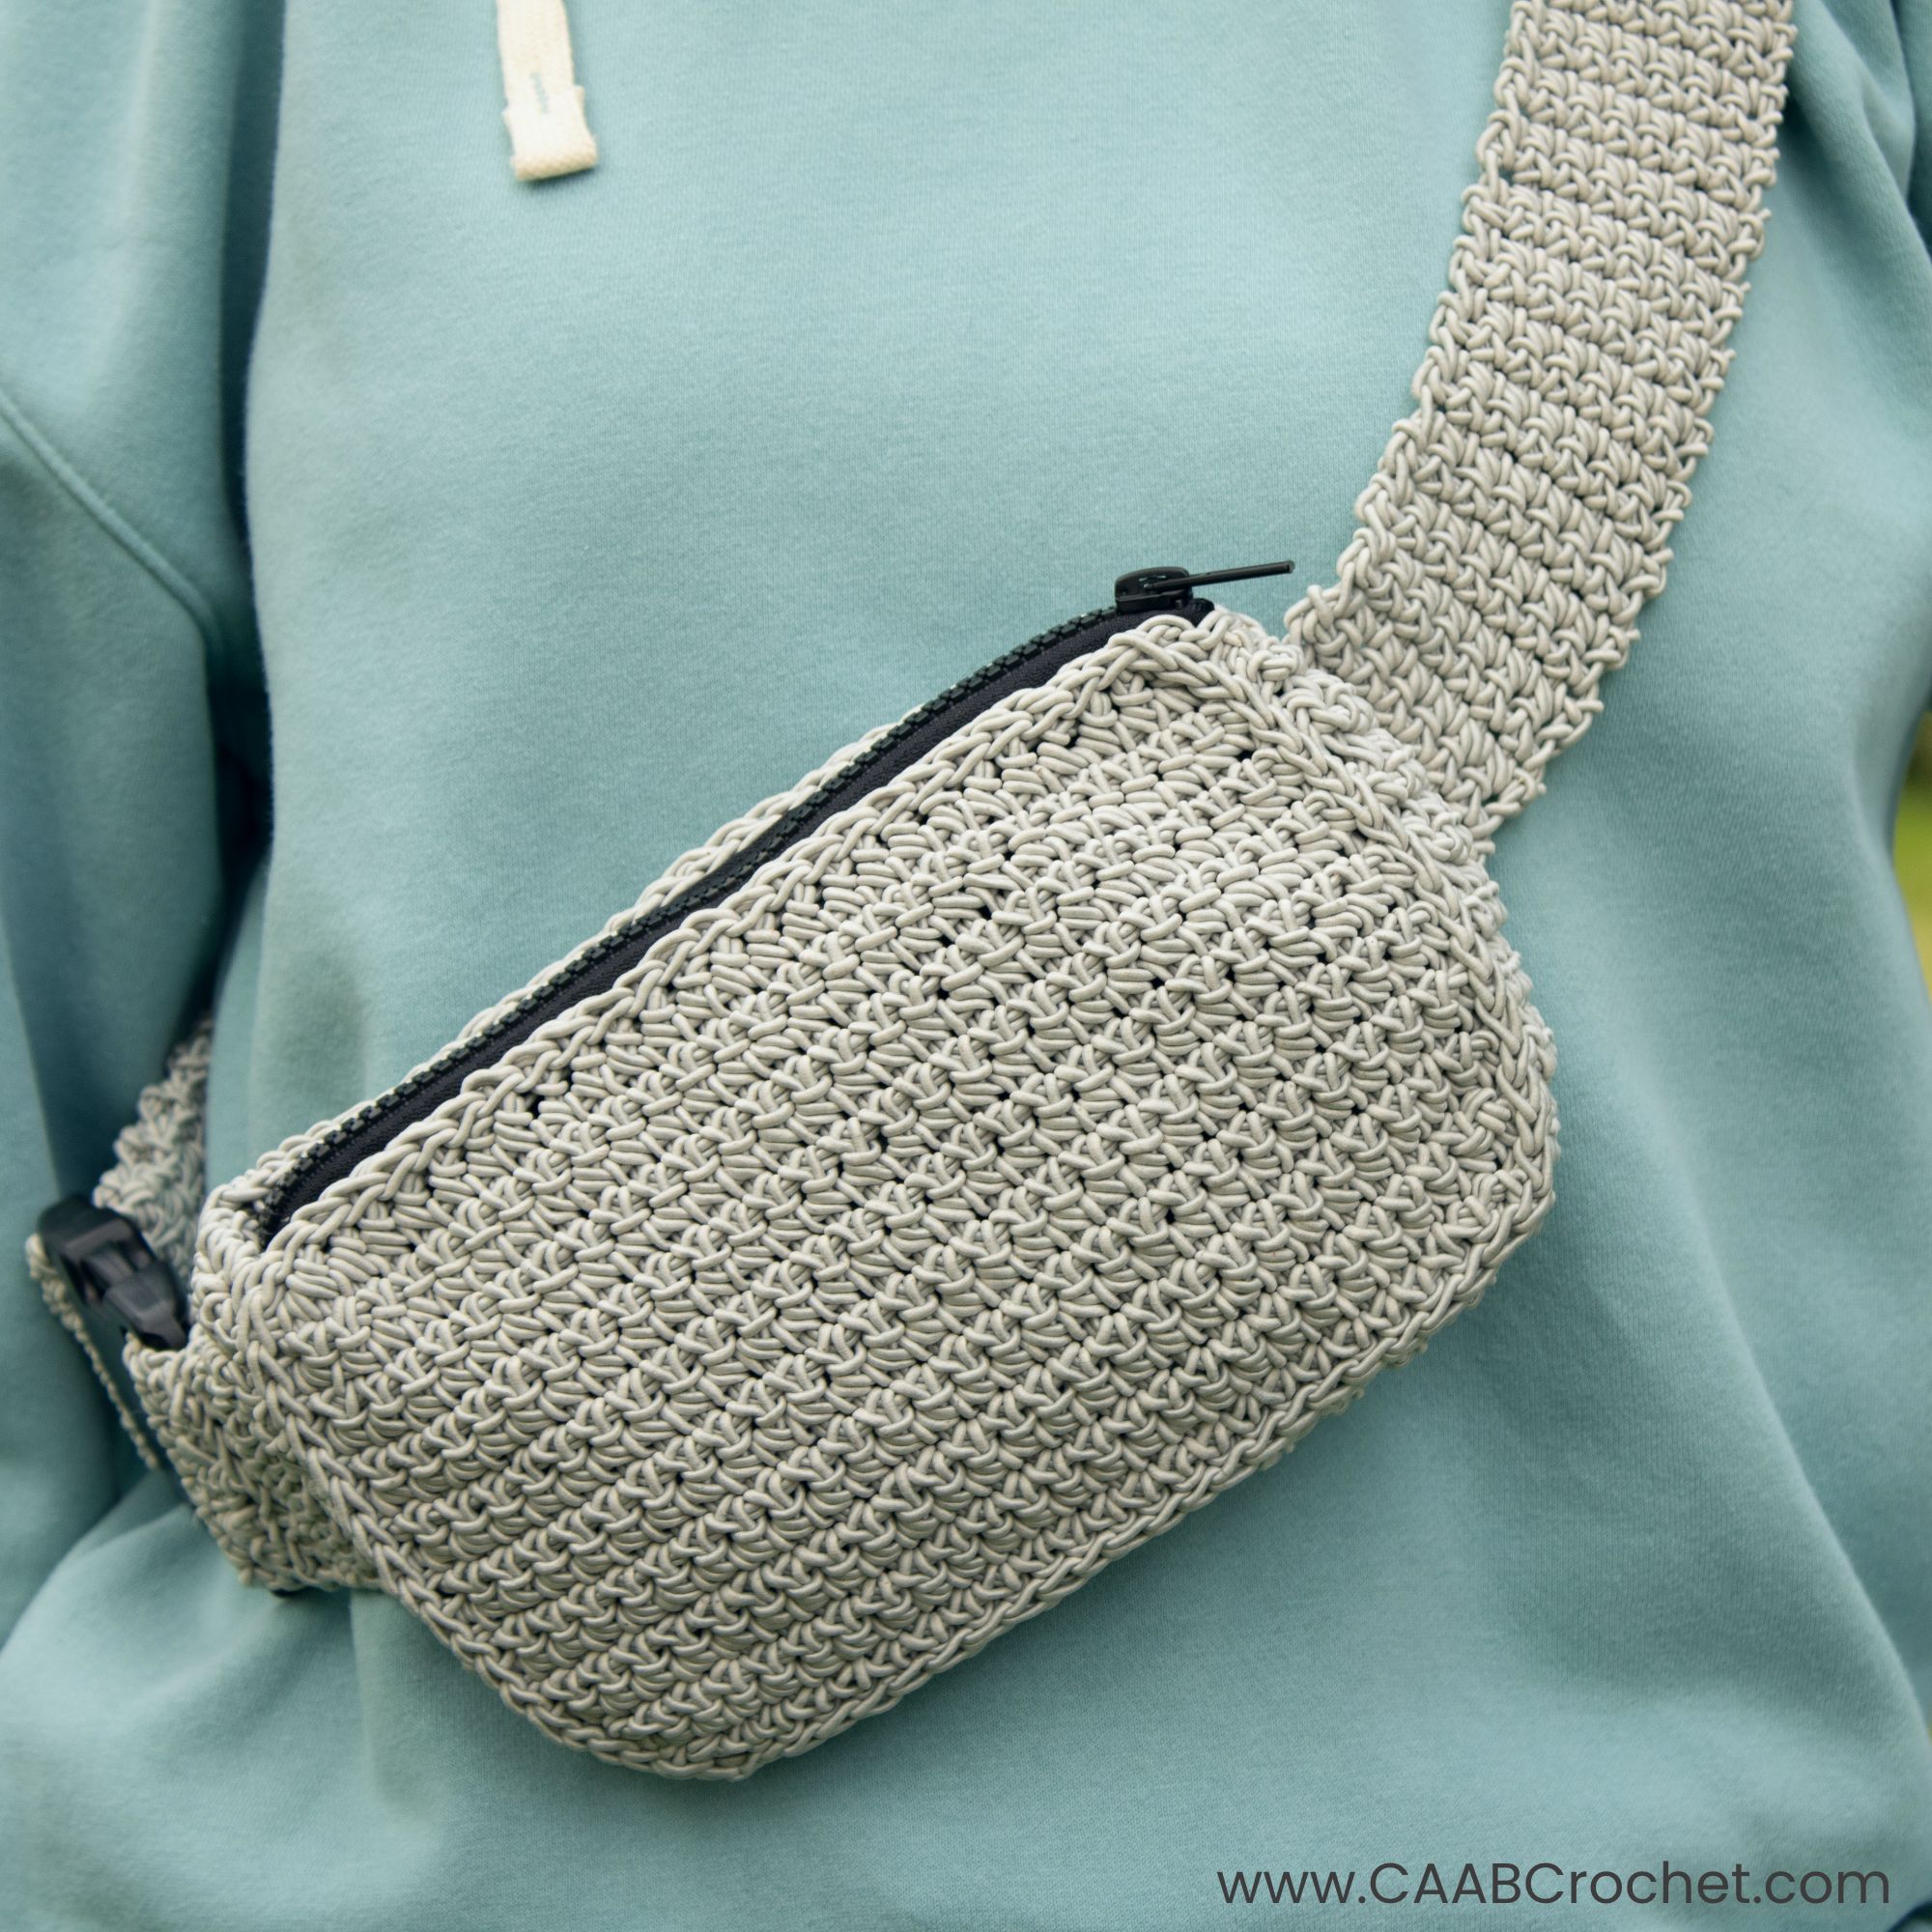 Easy Free Crochet Crossbody Bag Pattern